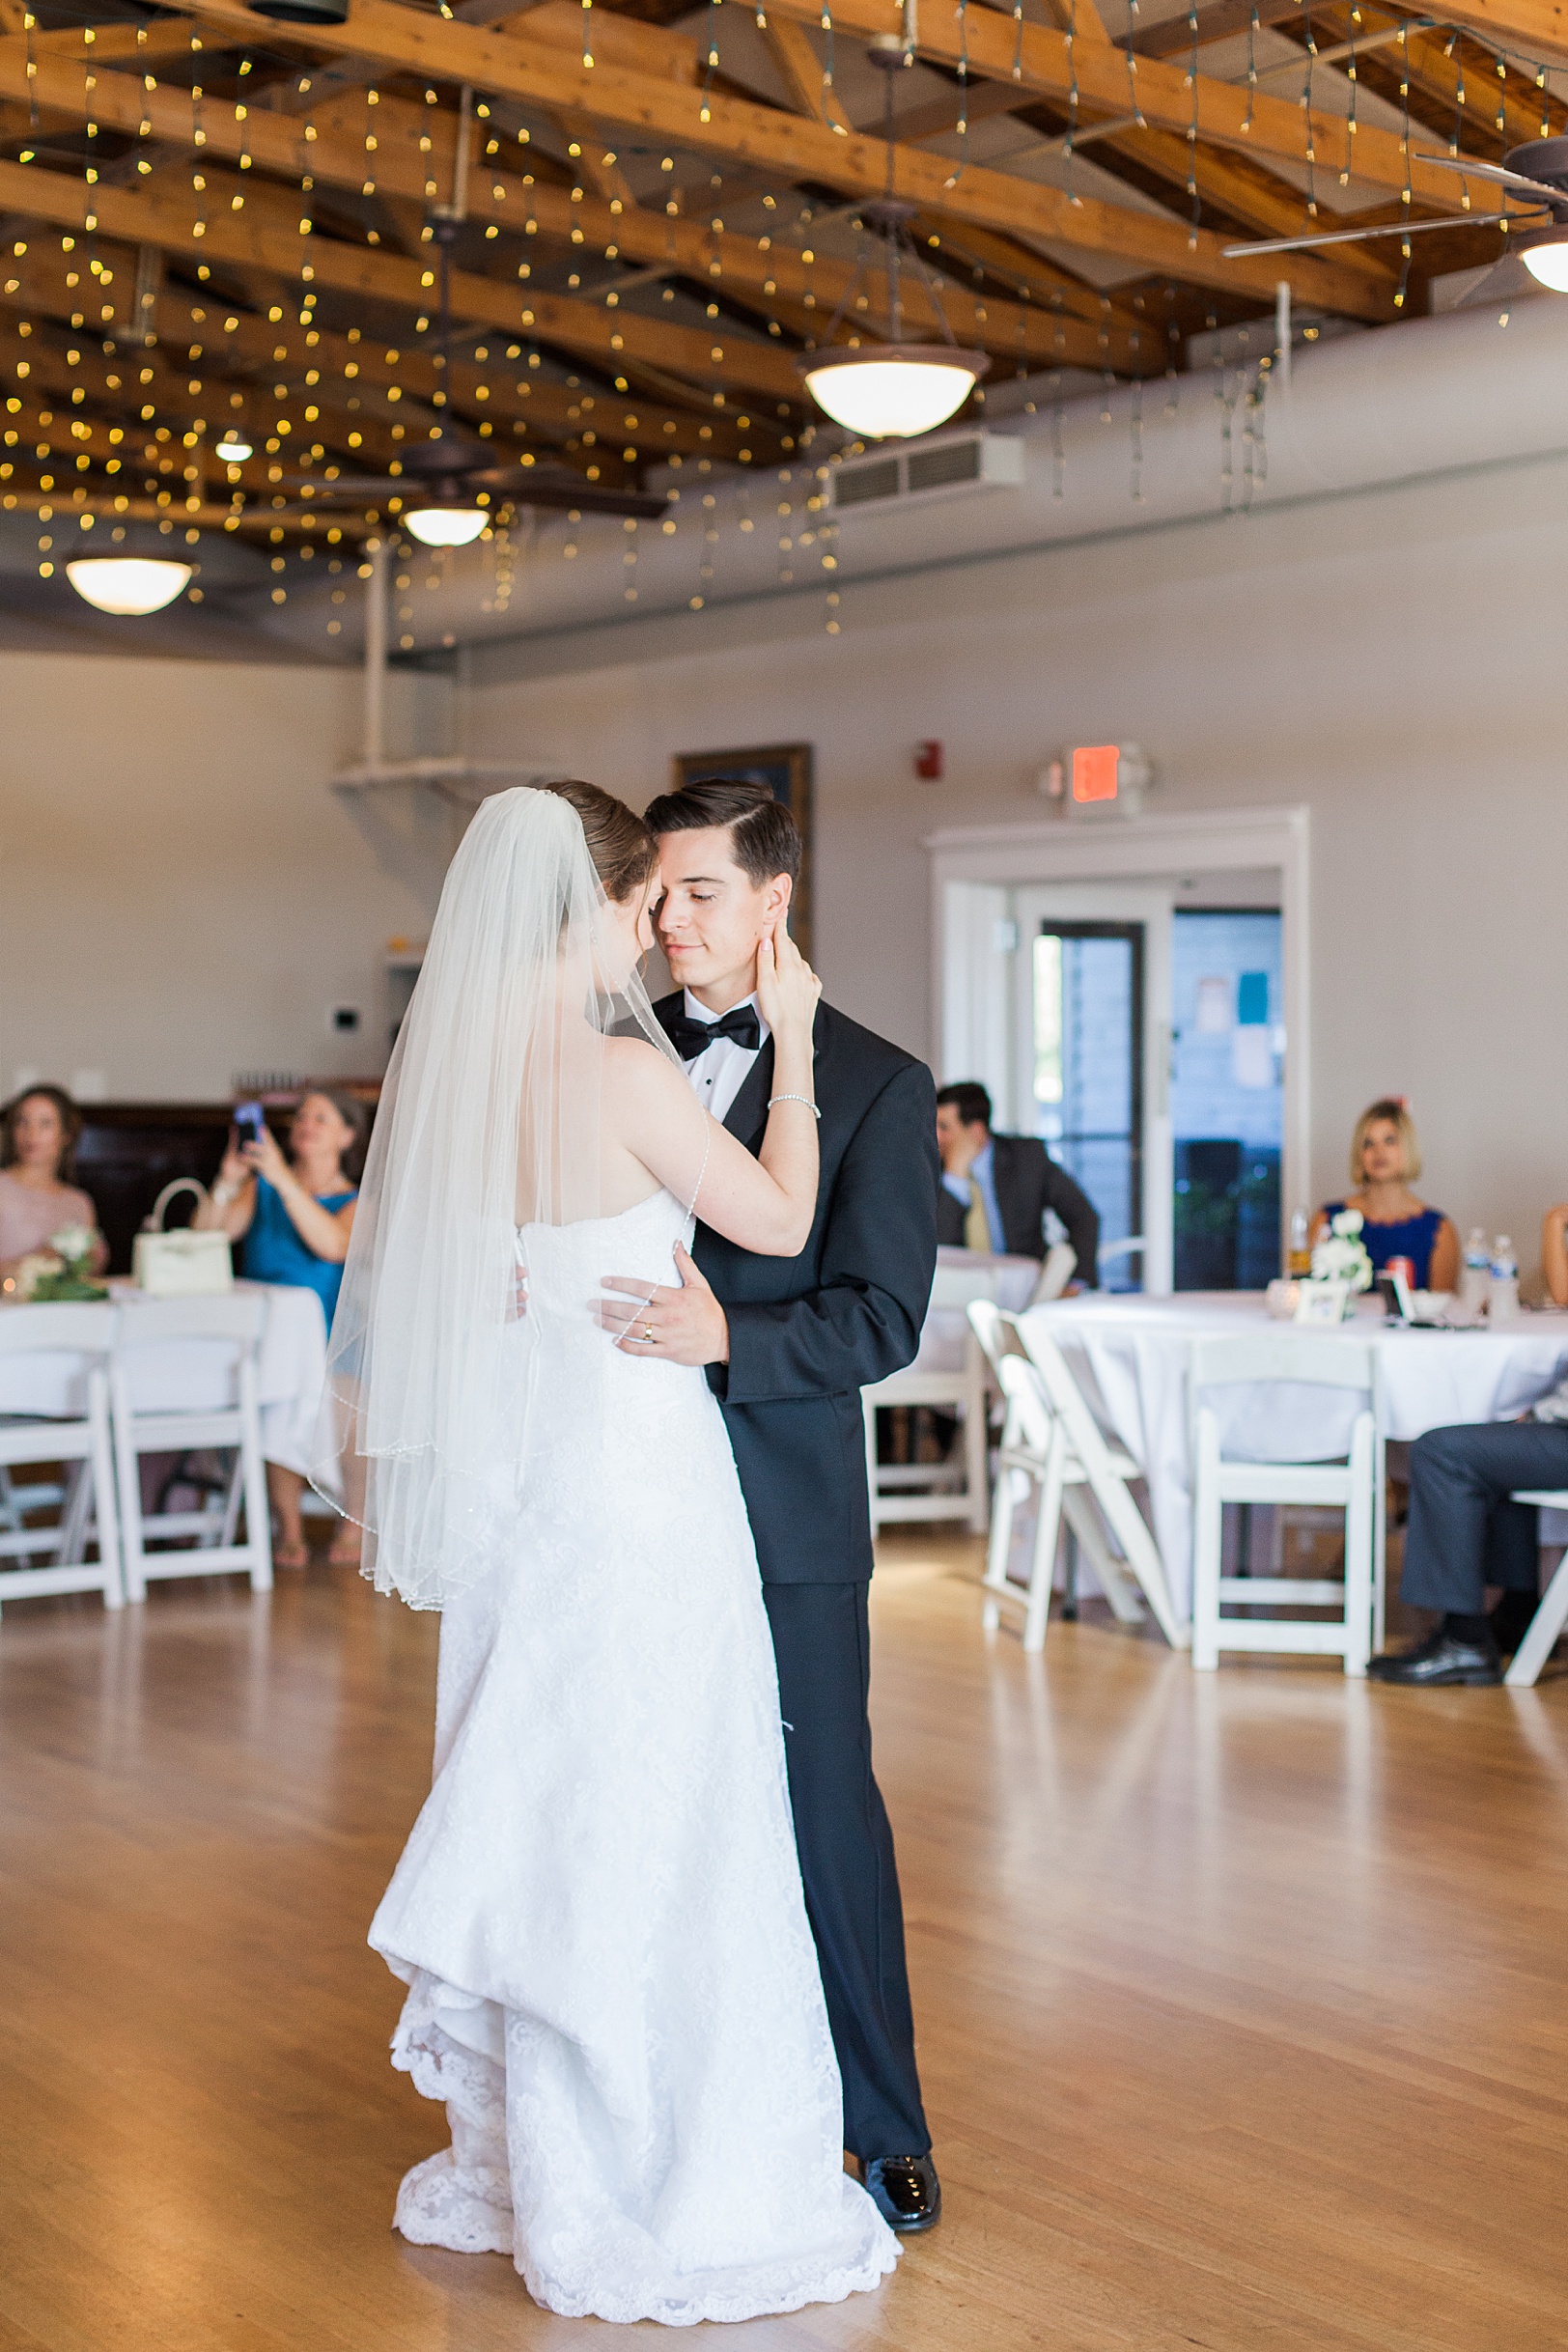 Charleston Yacht Club Bride and Groom First Dance | Kaitlin Scott Photography